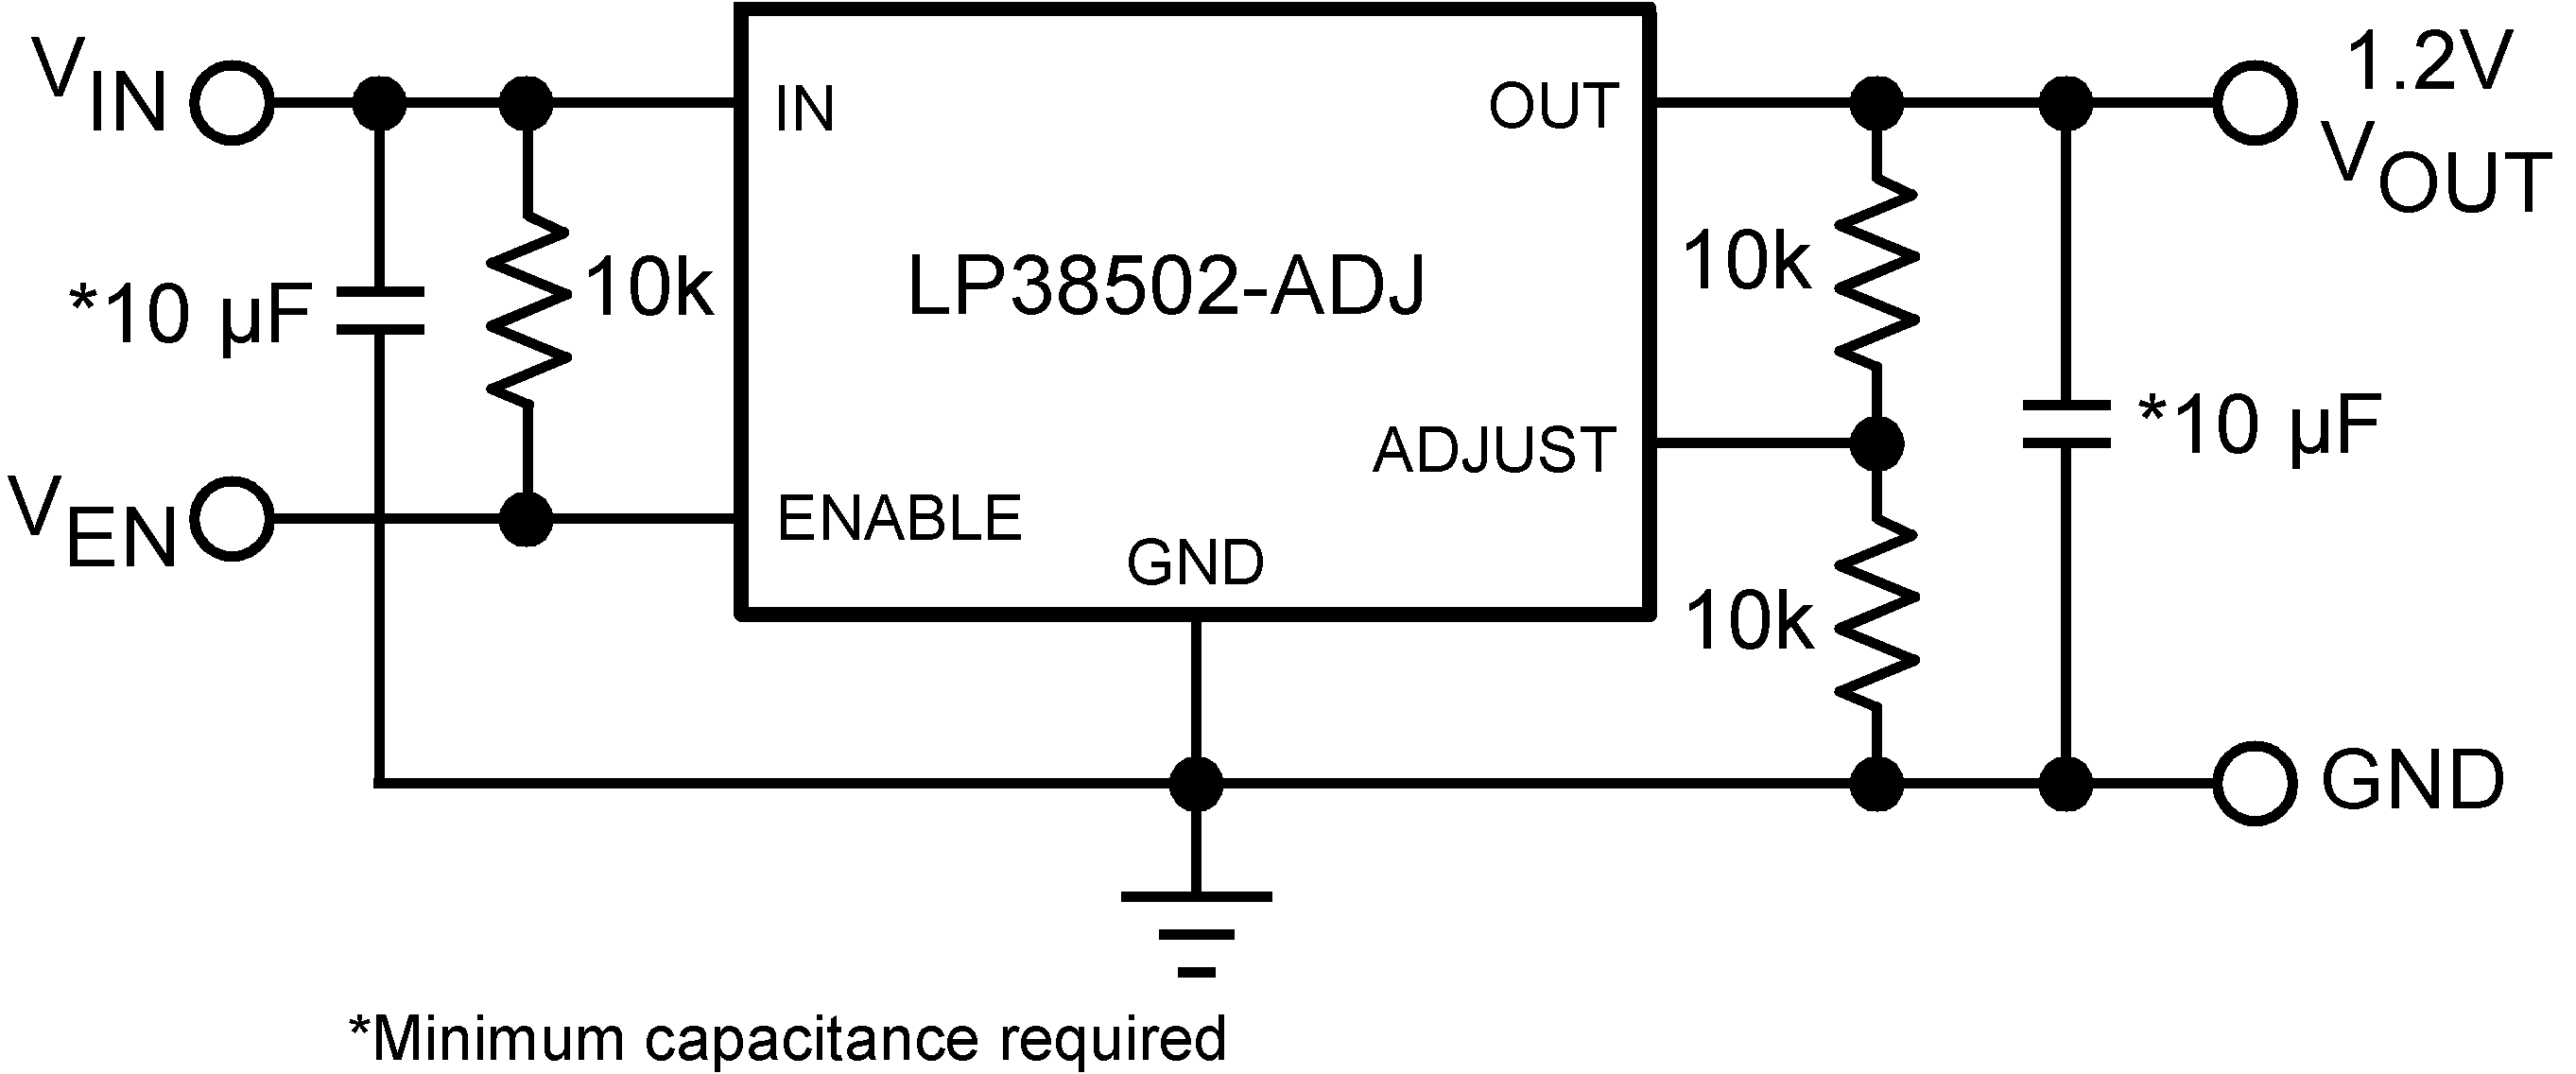 LP38502-ADJ-LP3850x-ADJ, LP3850xA-ADJ 1.5-A Flexcap Low-Dropout Linear Regulator for 2.7-V to 5.5-V Inputs